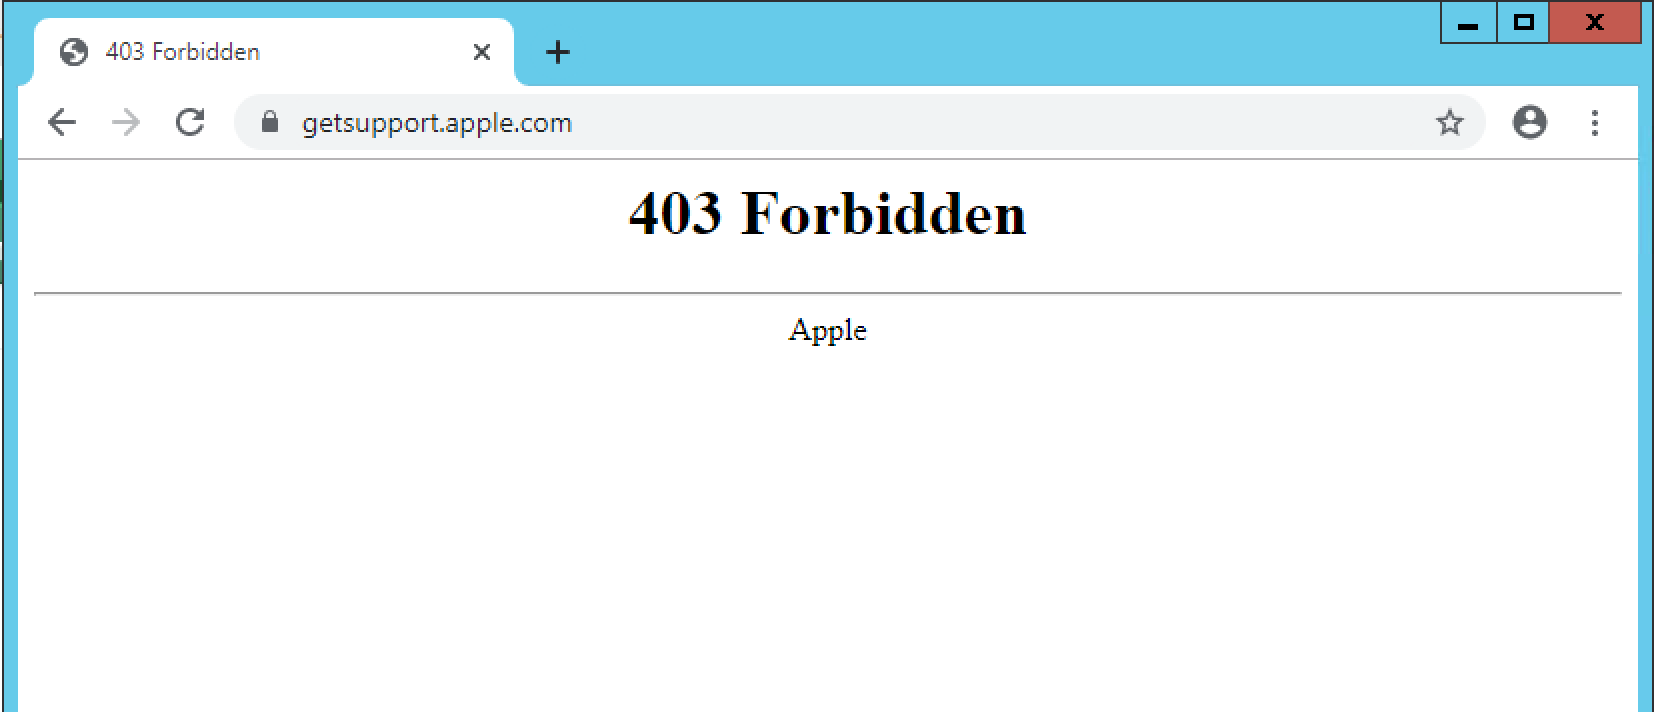 403 Forbidden Error Page - Apple Community